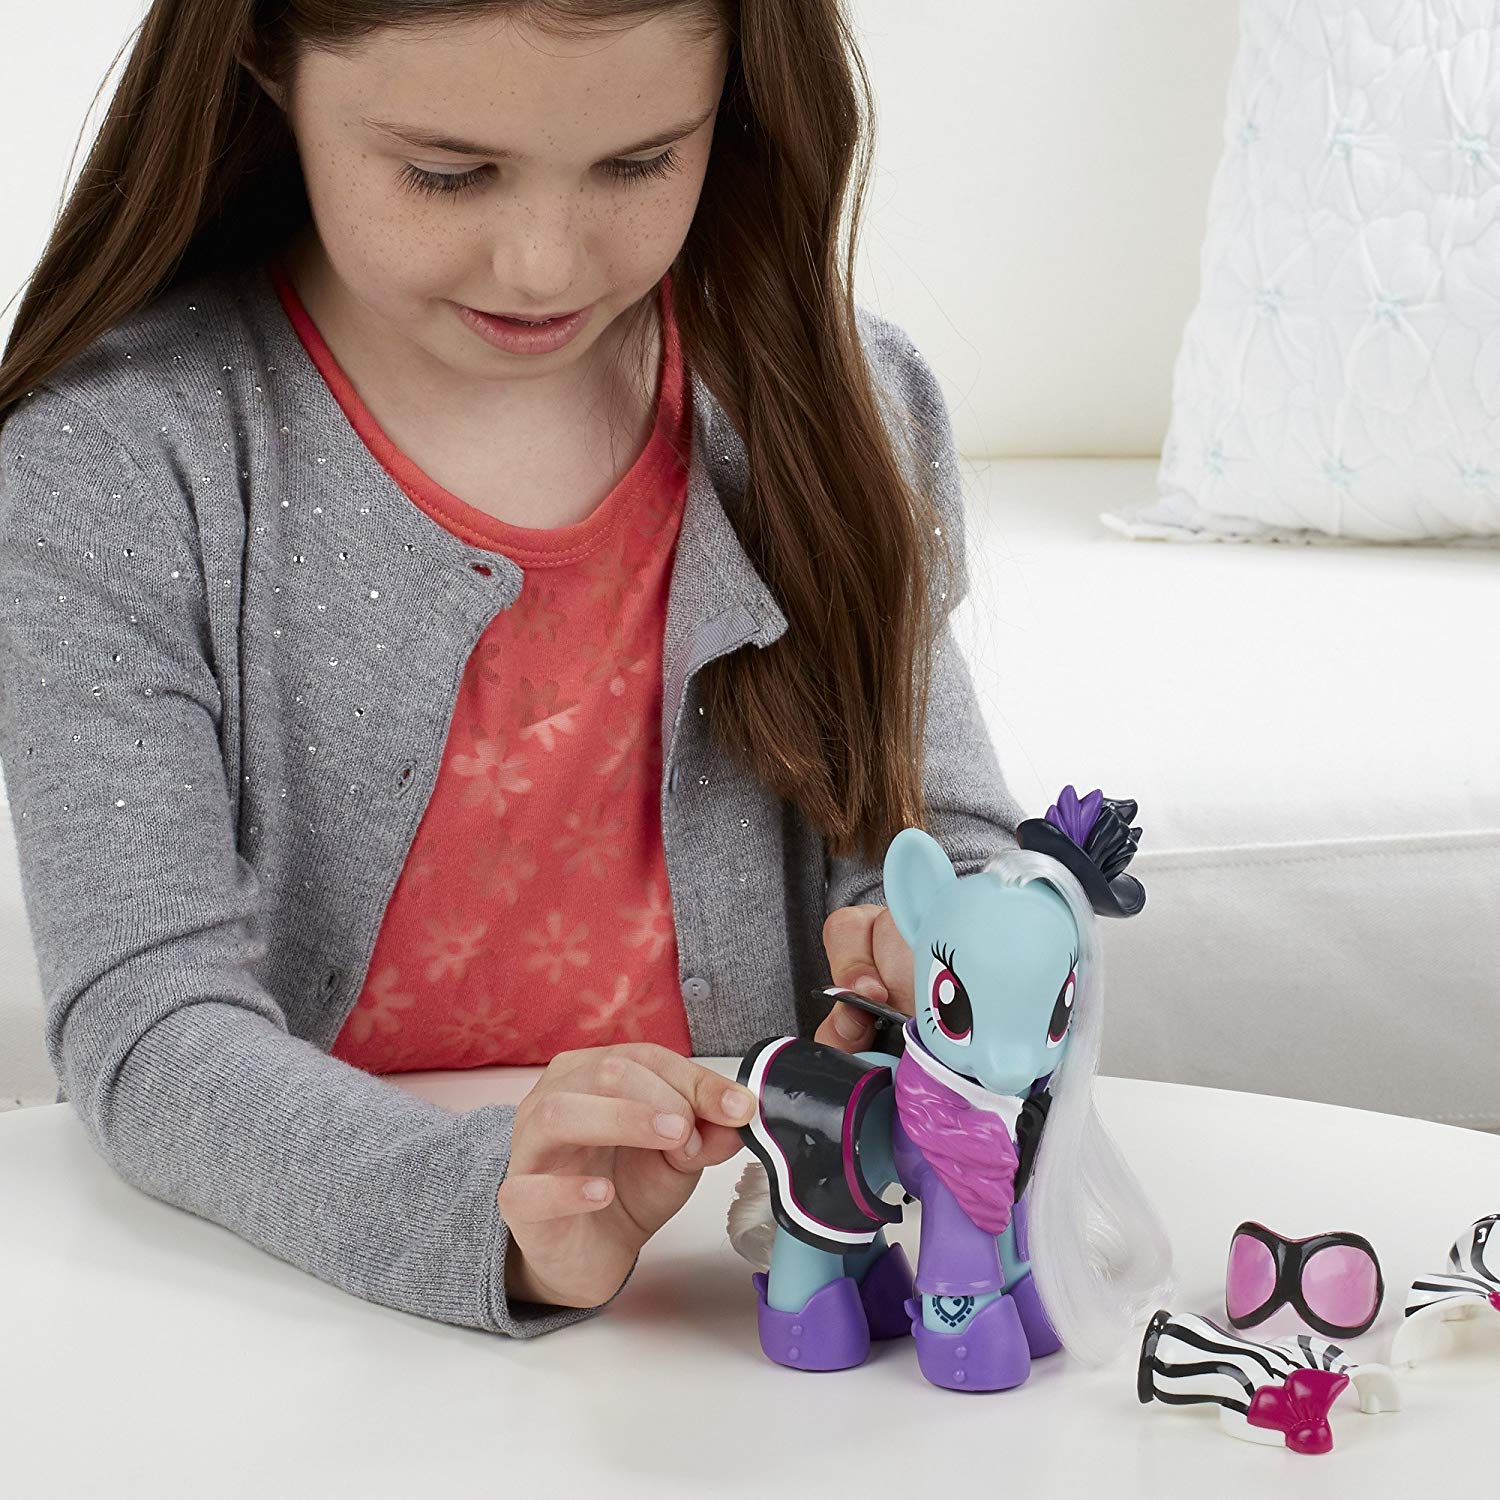 Buy Hasbro My Little Pony Explore Equestria 6-inch Fashion Style 